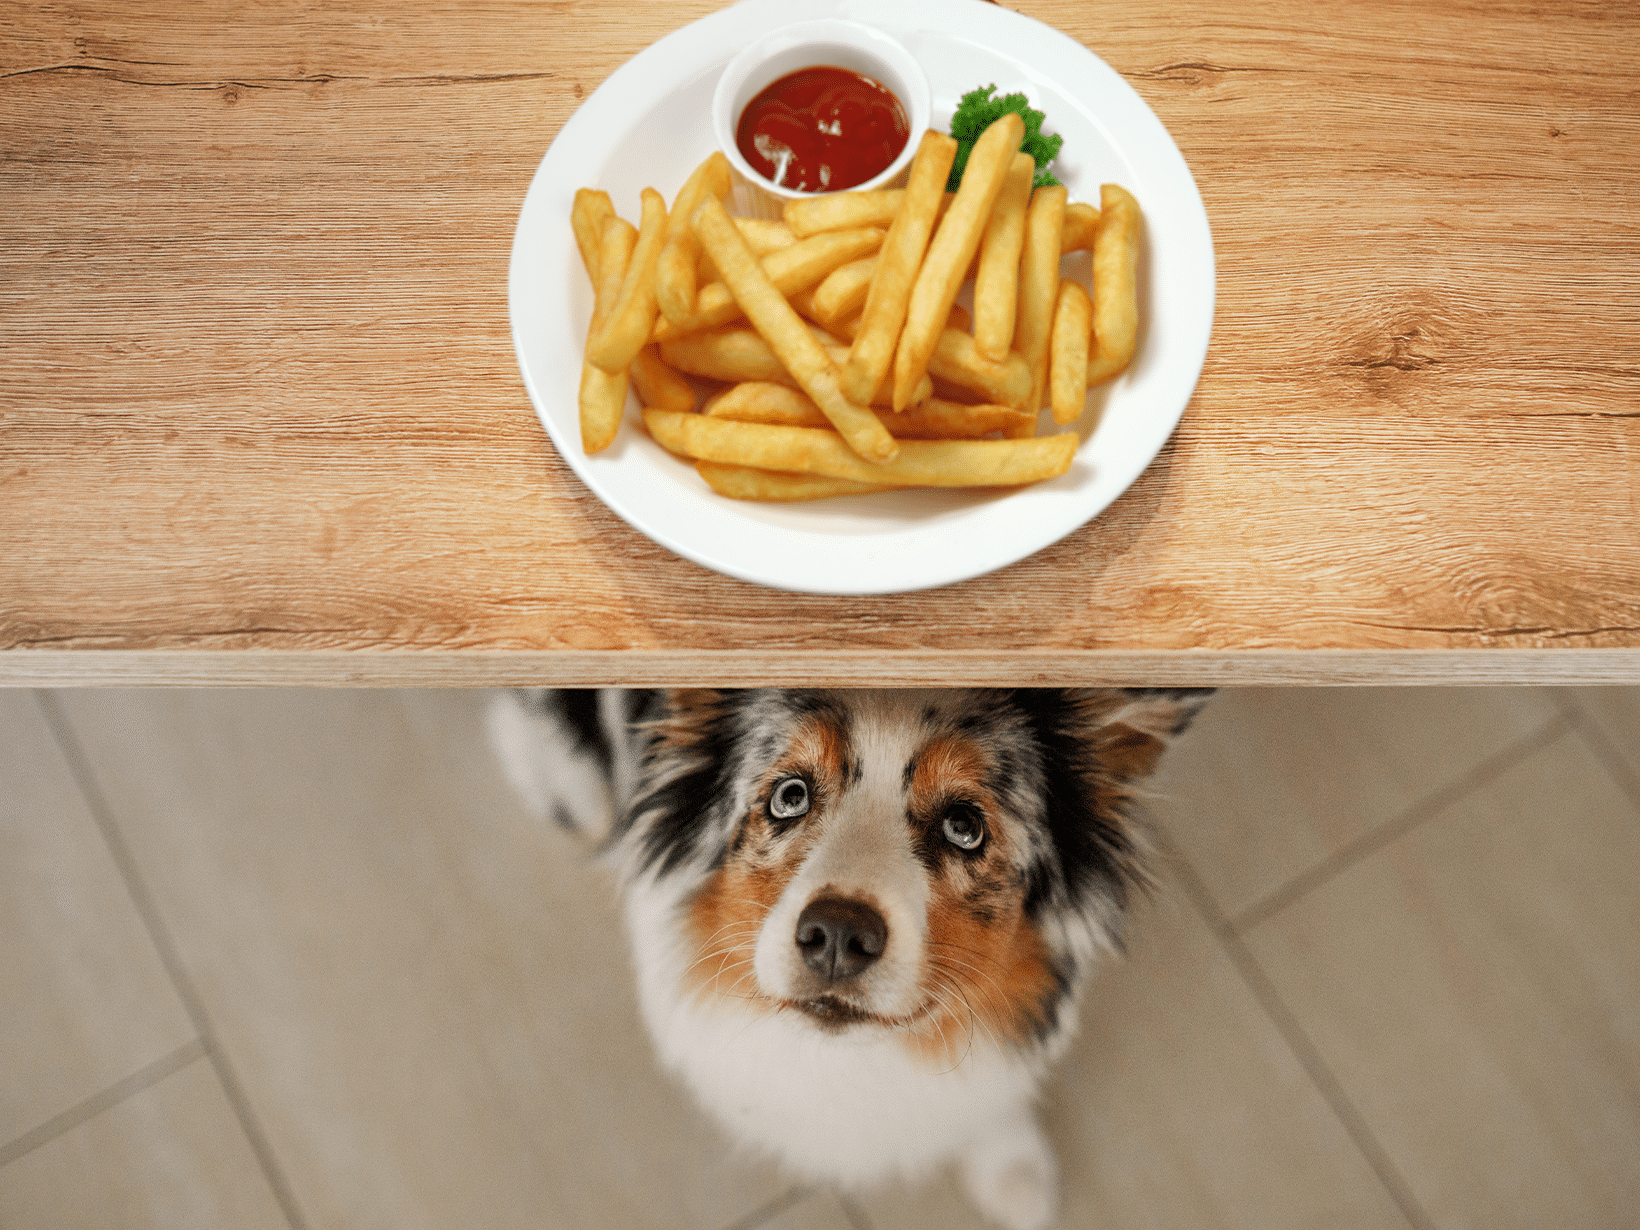 Mag een hond patat?